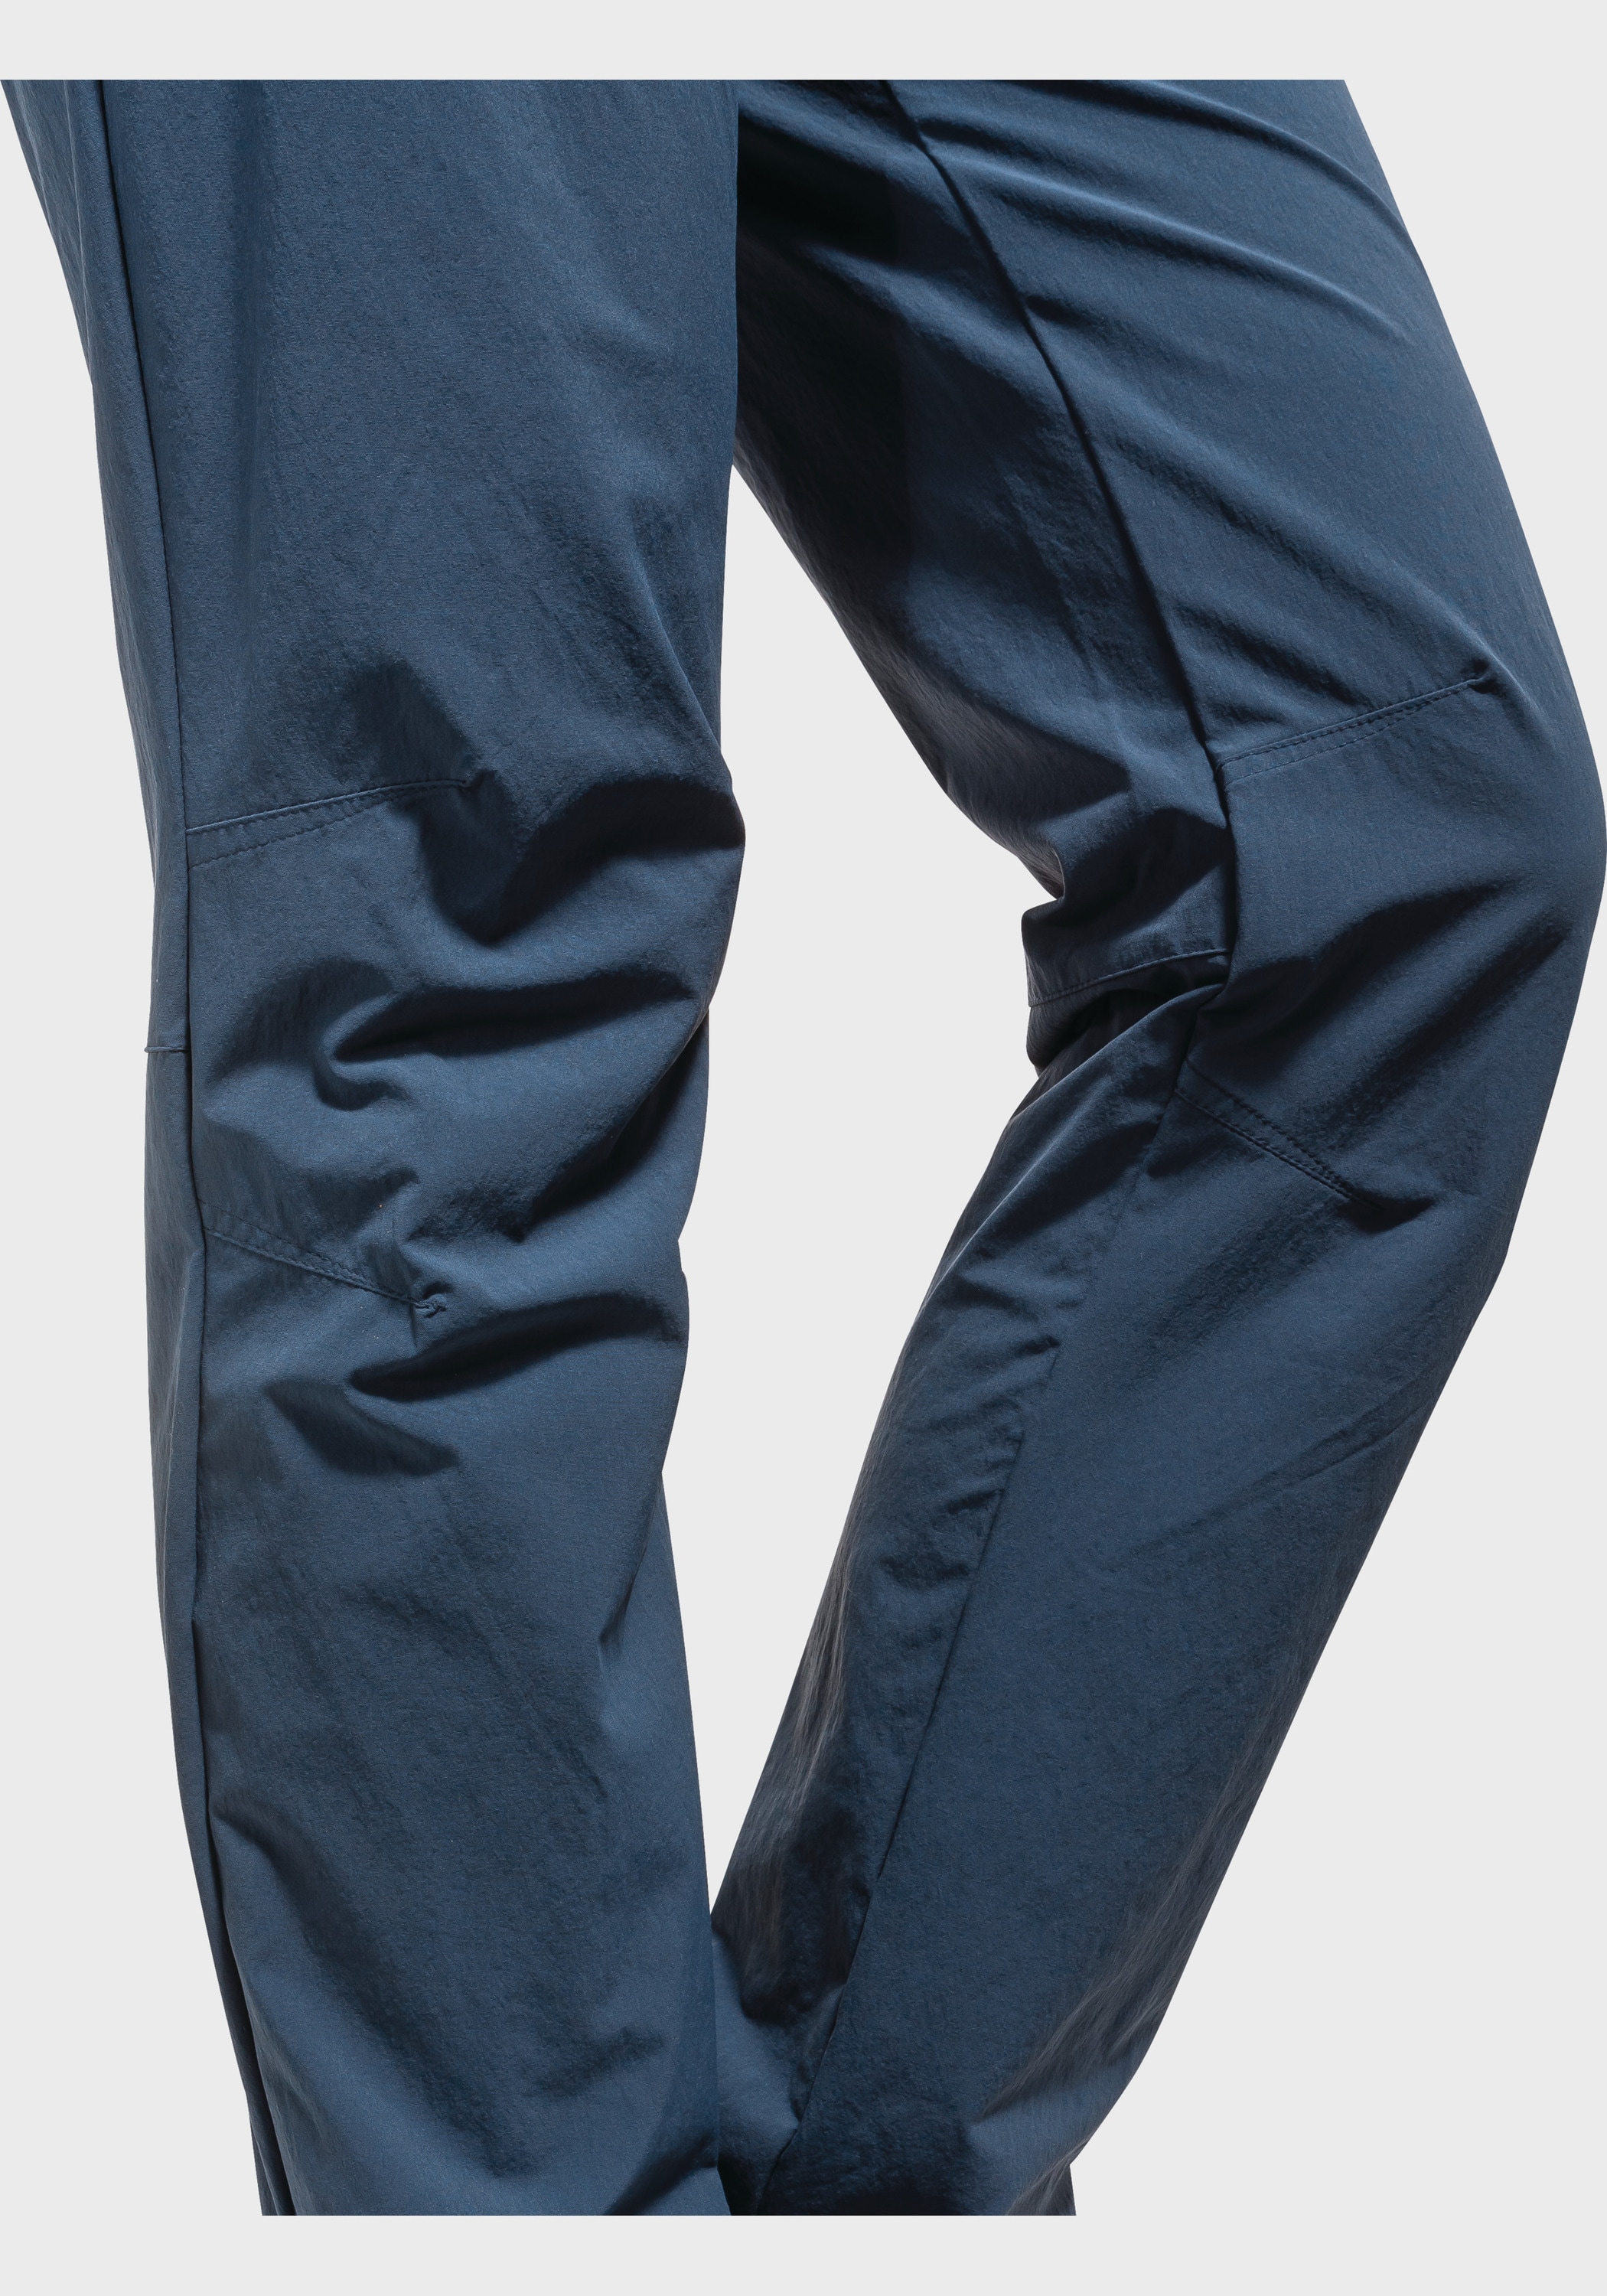 Schöffel Outdoorhose »Pants Engadin1«